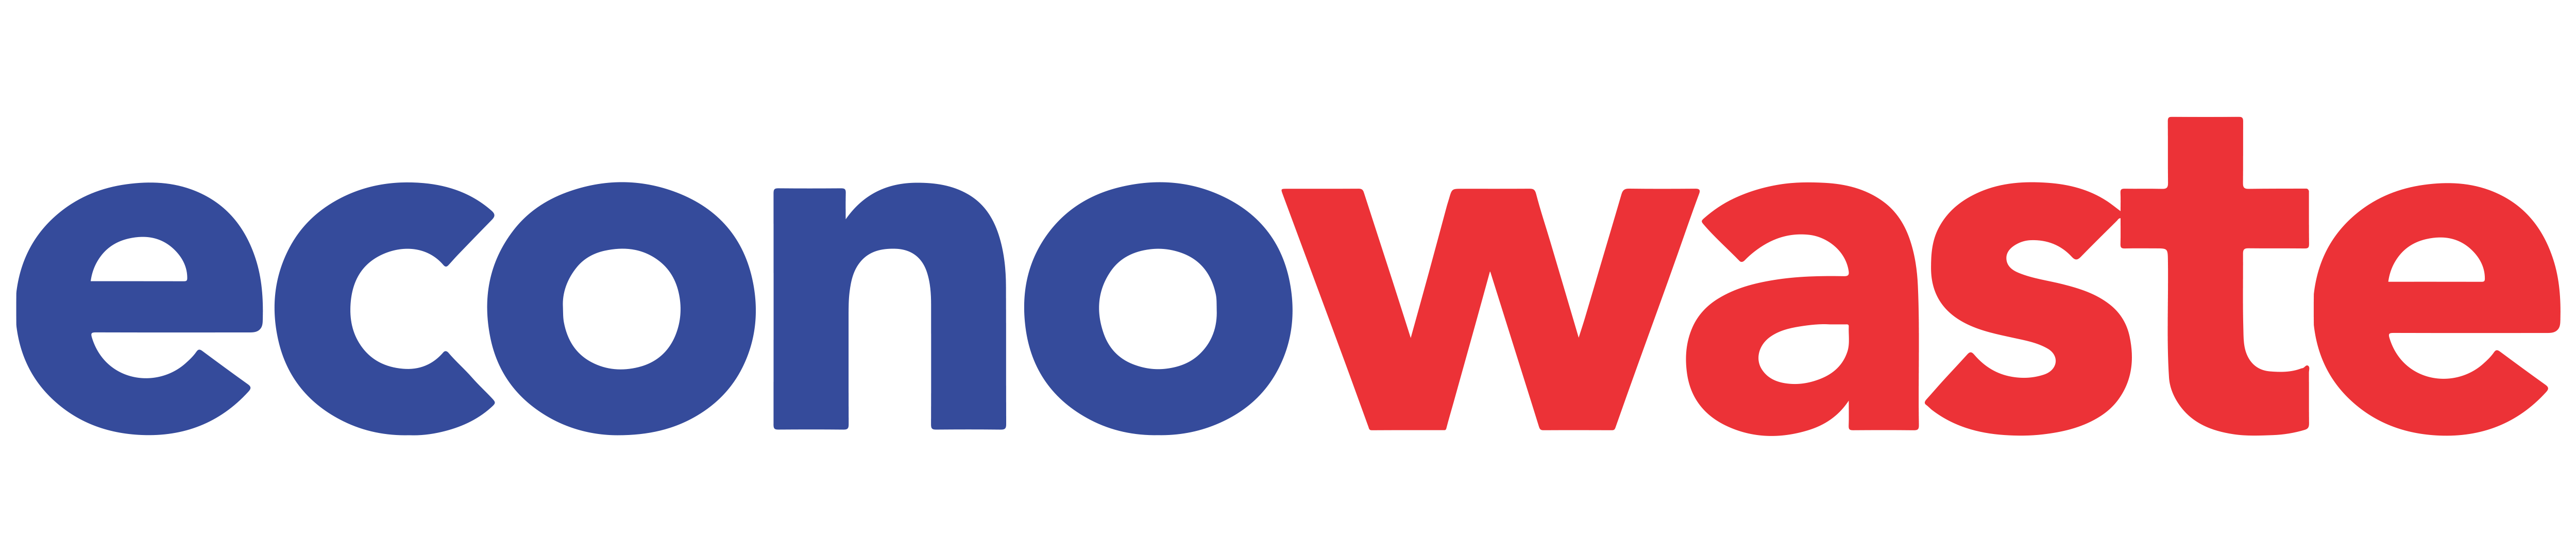 Econowaste Website logo